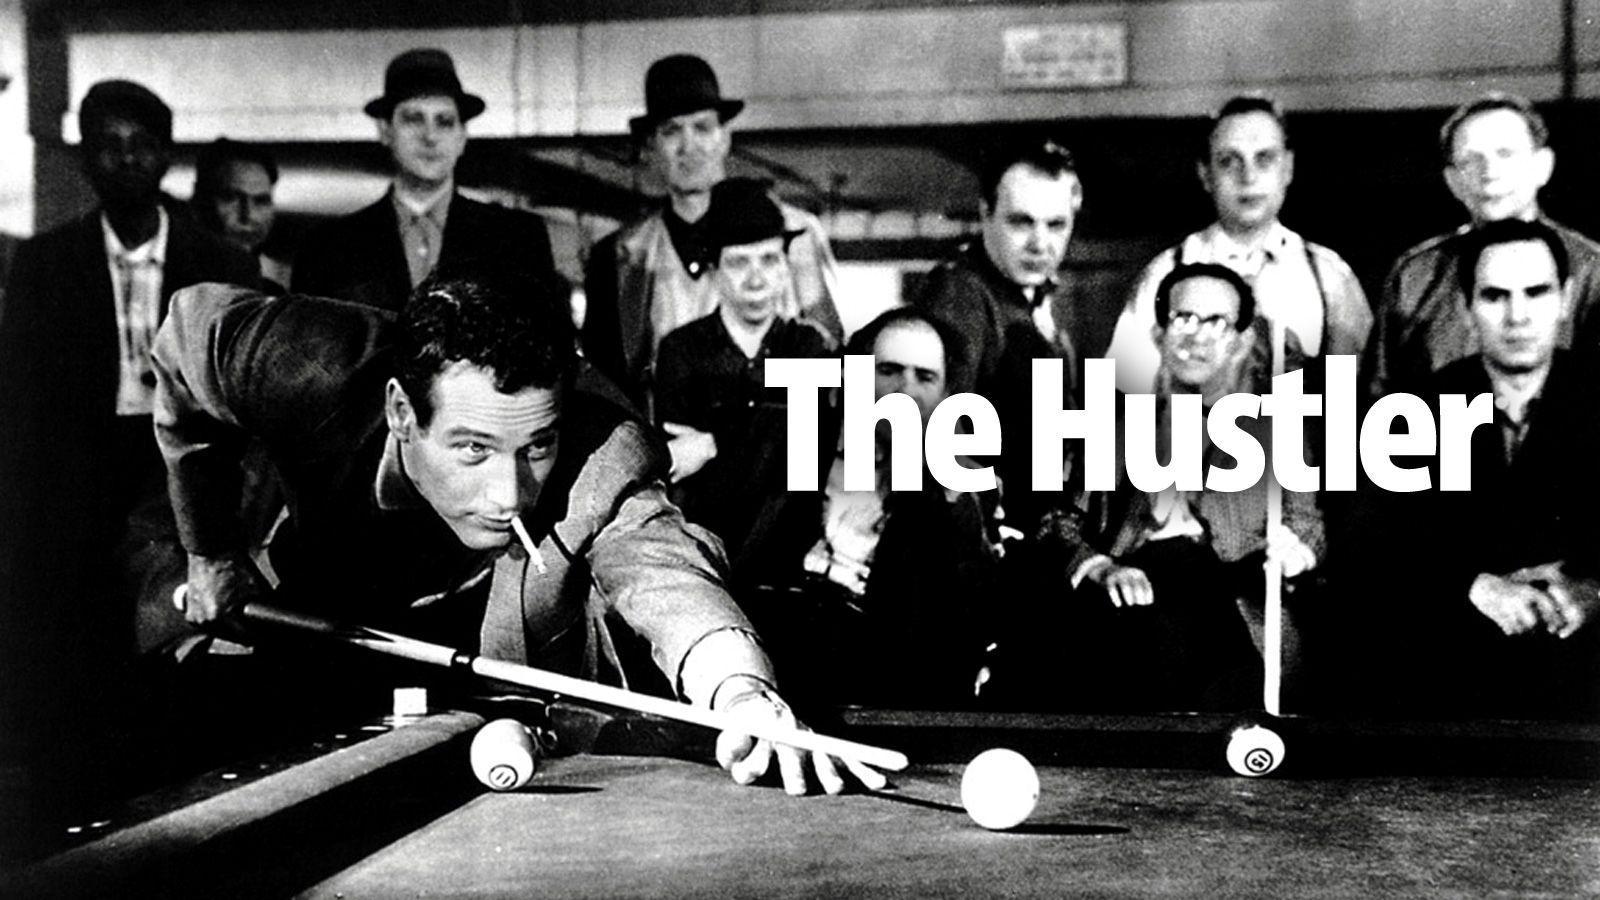 The hustler wear star billiards